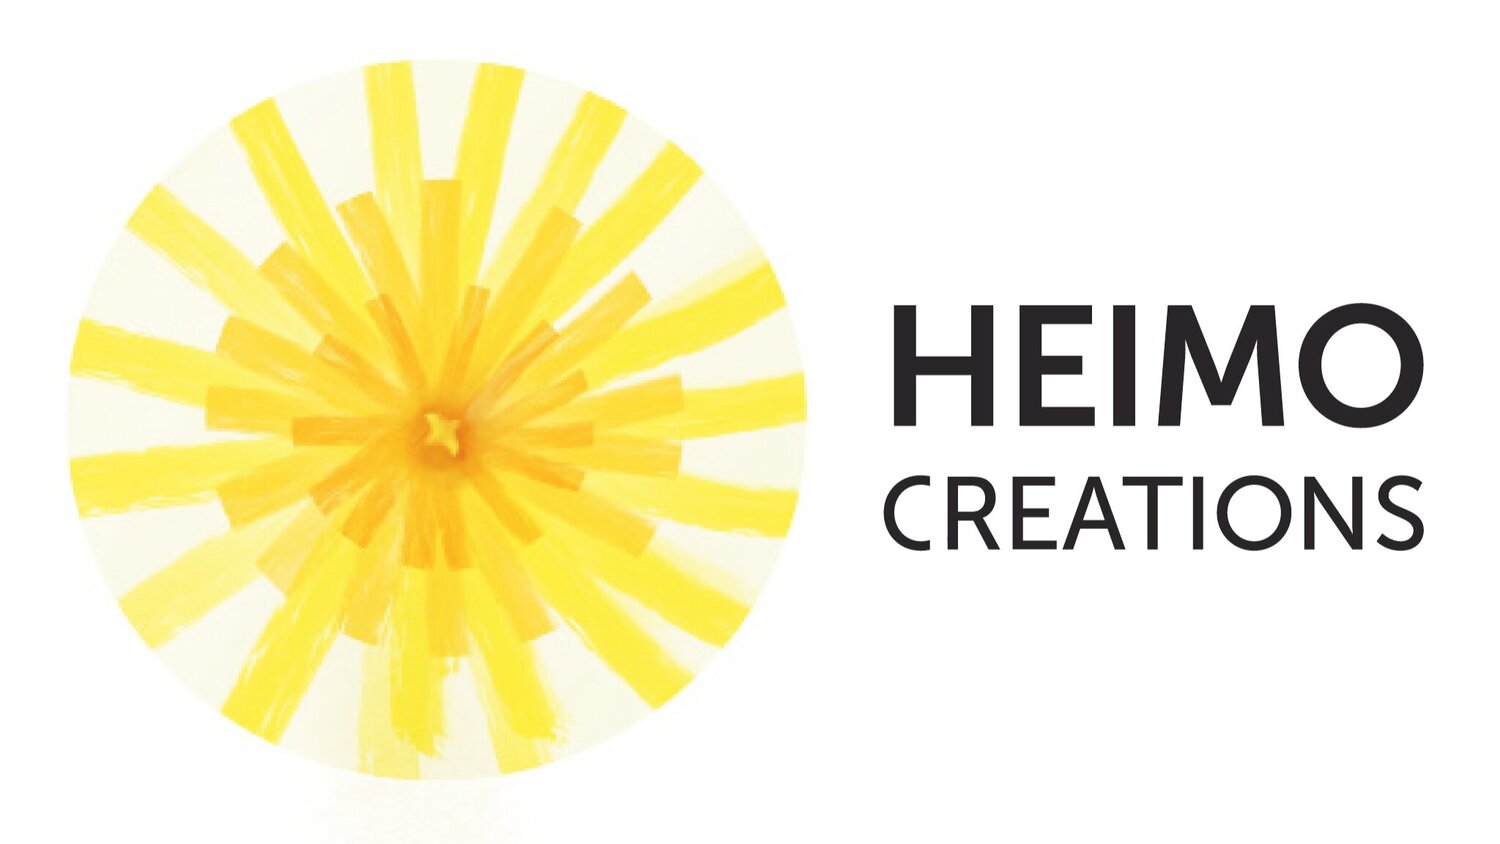 Heimo Creations